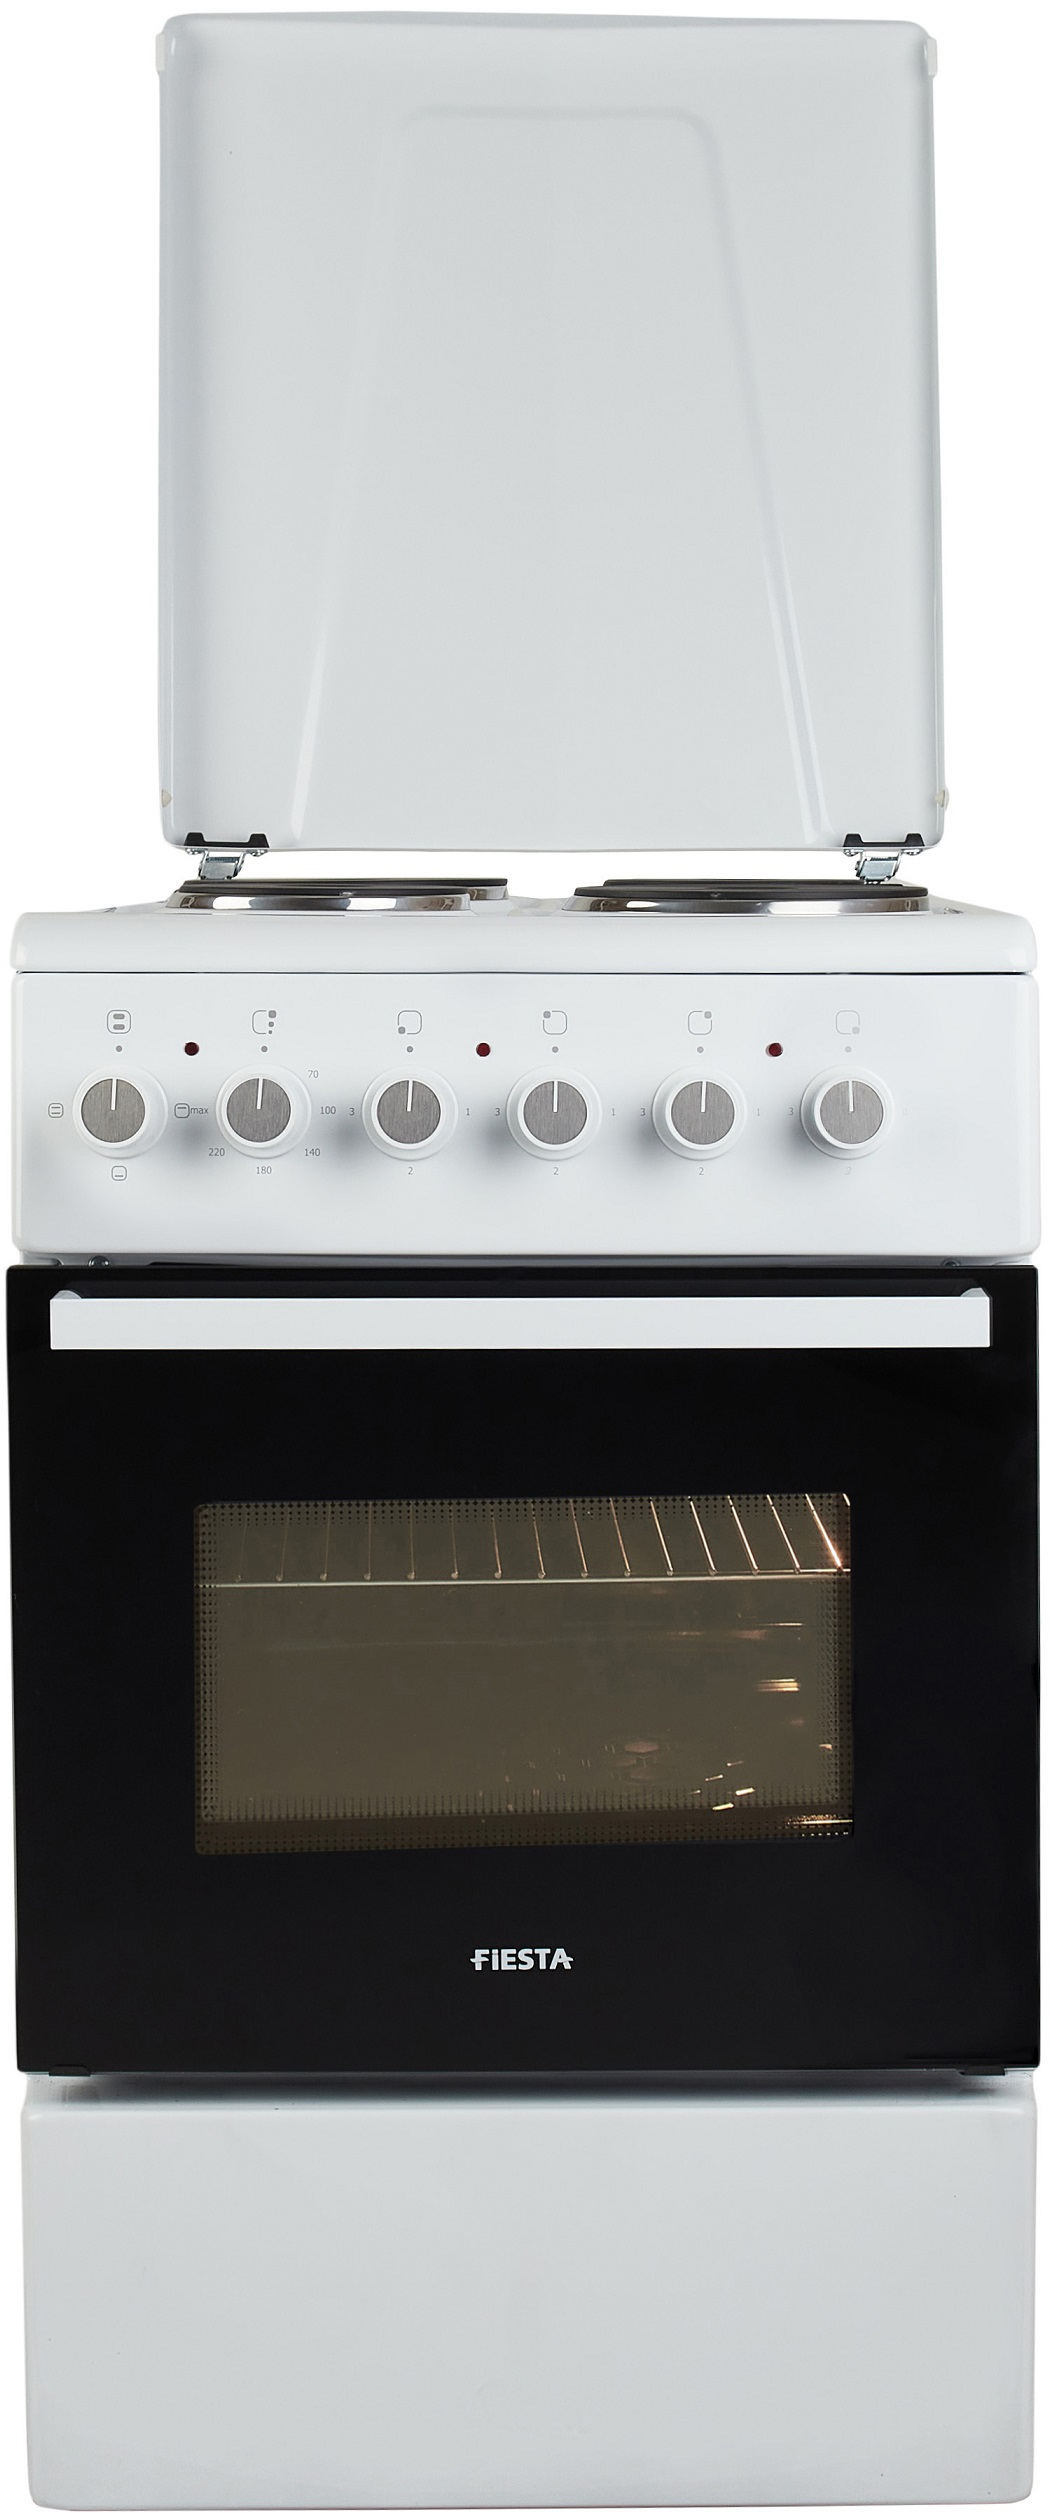 Кухонная плита Fiesta E 5043 H-W в интернет-магазине, главное фото